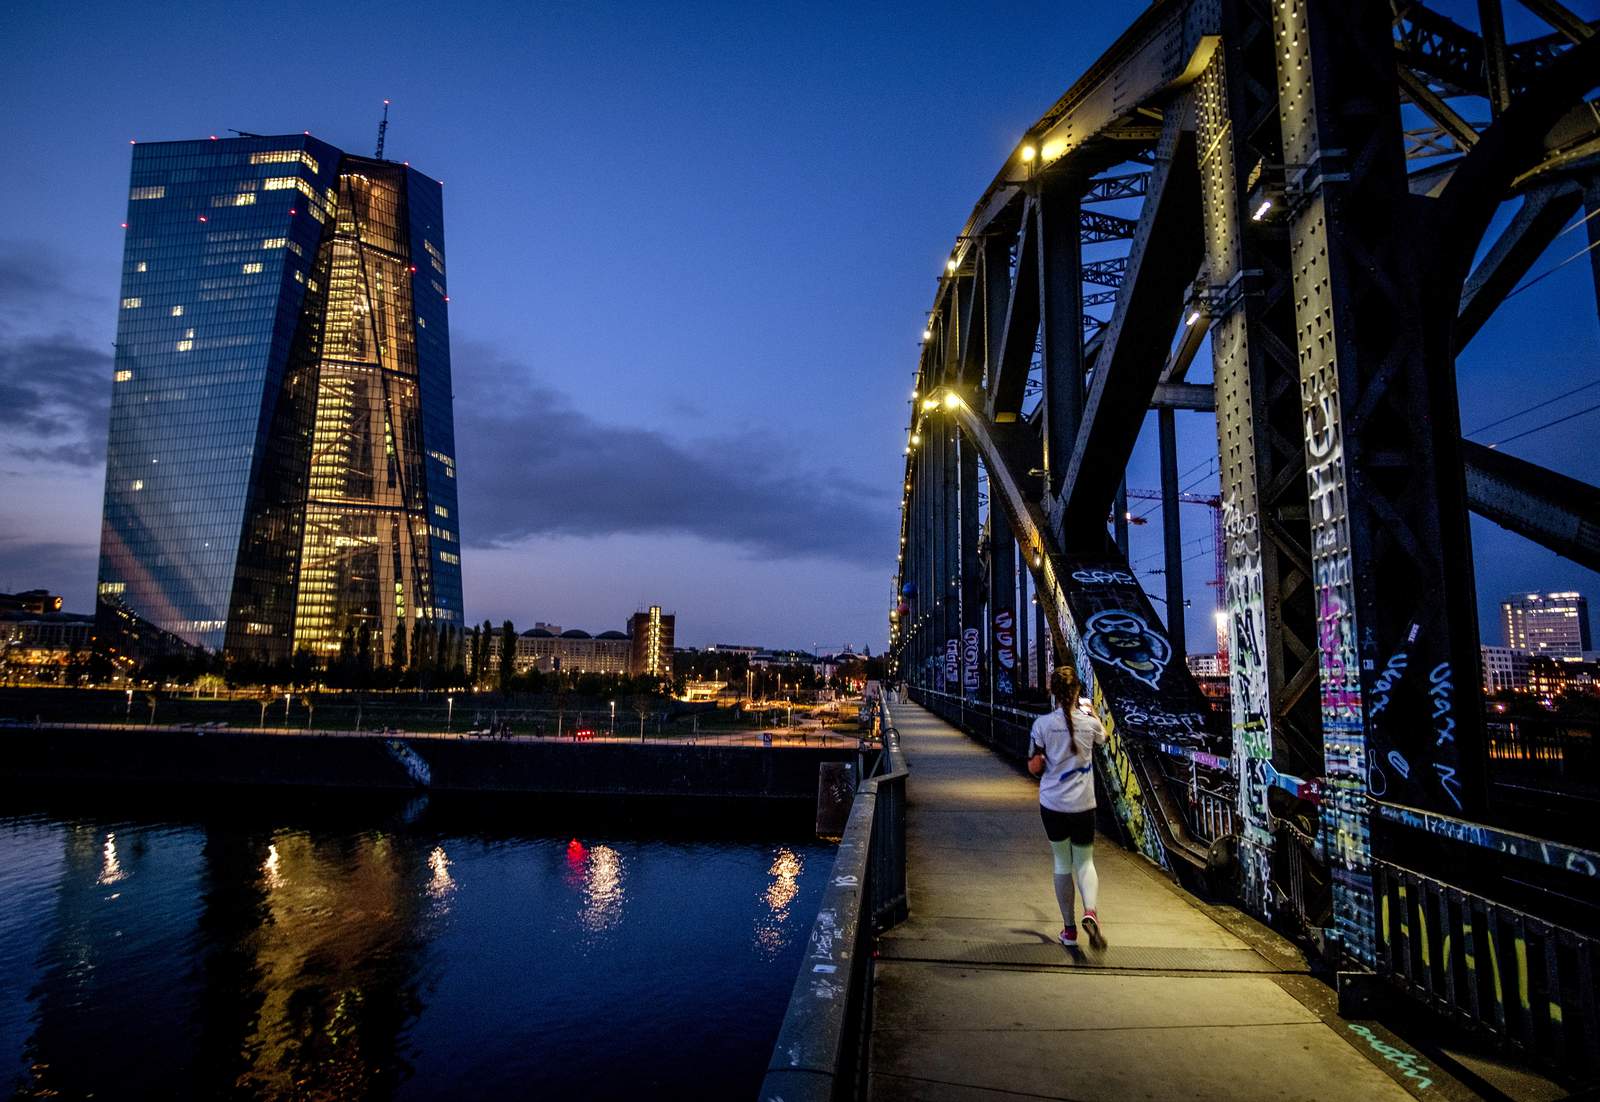 Europe's central bank moves toward introducing digital euro